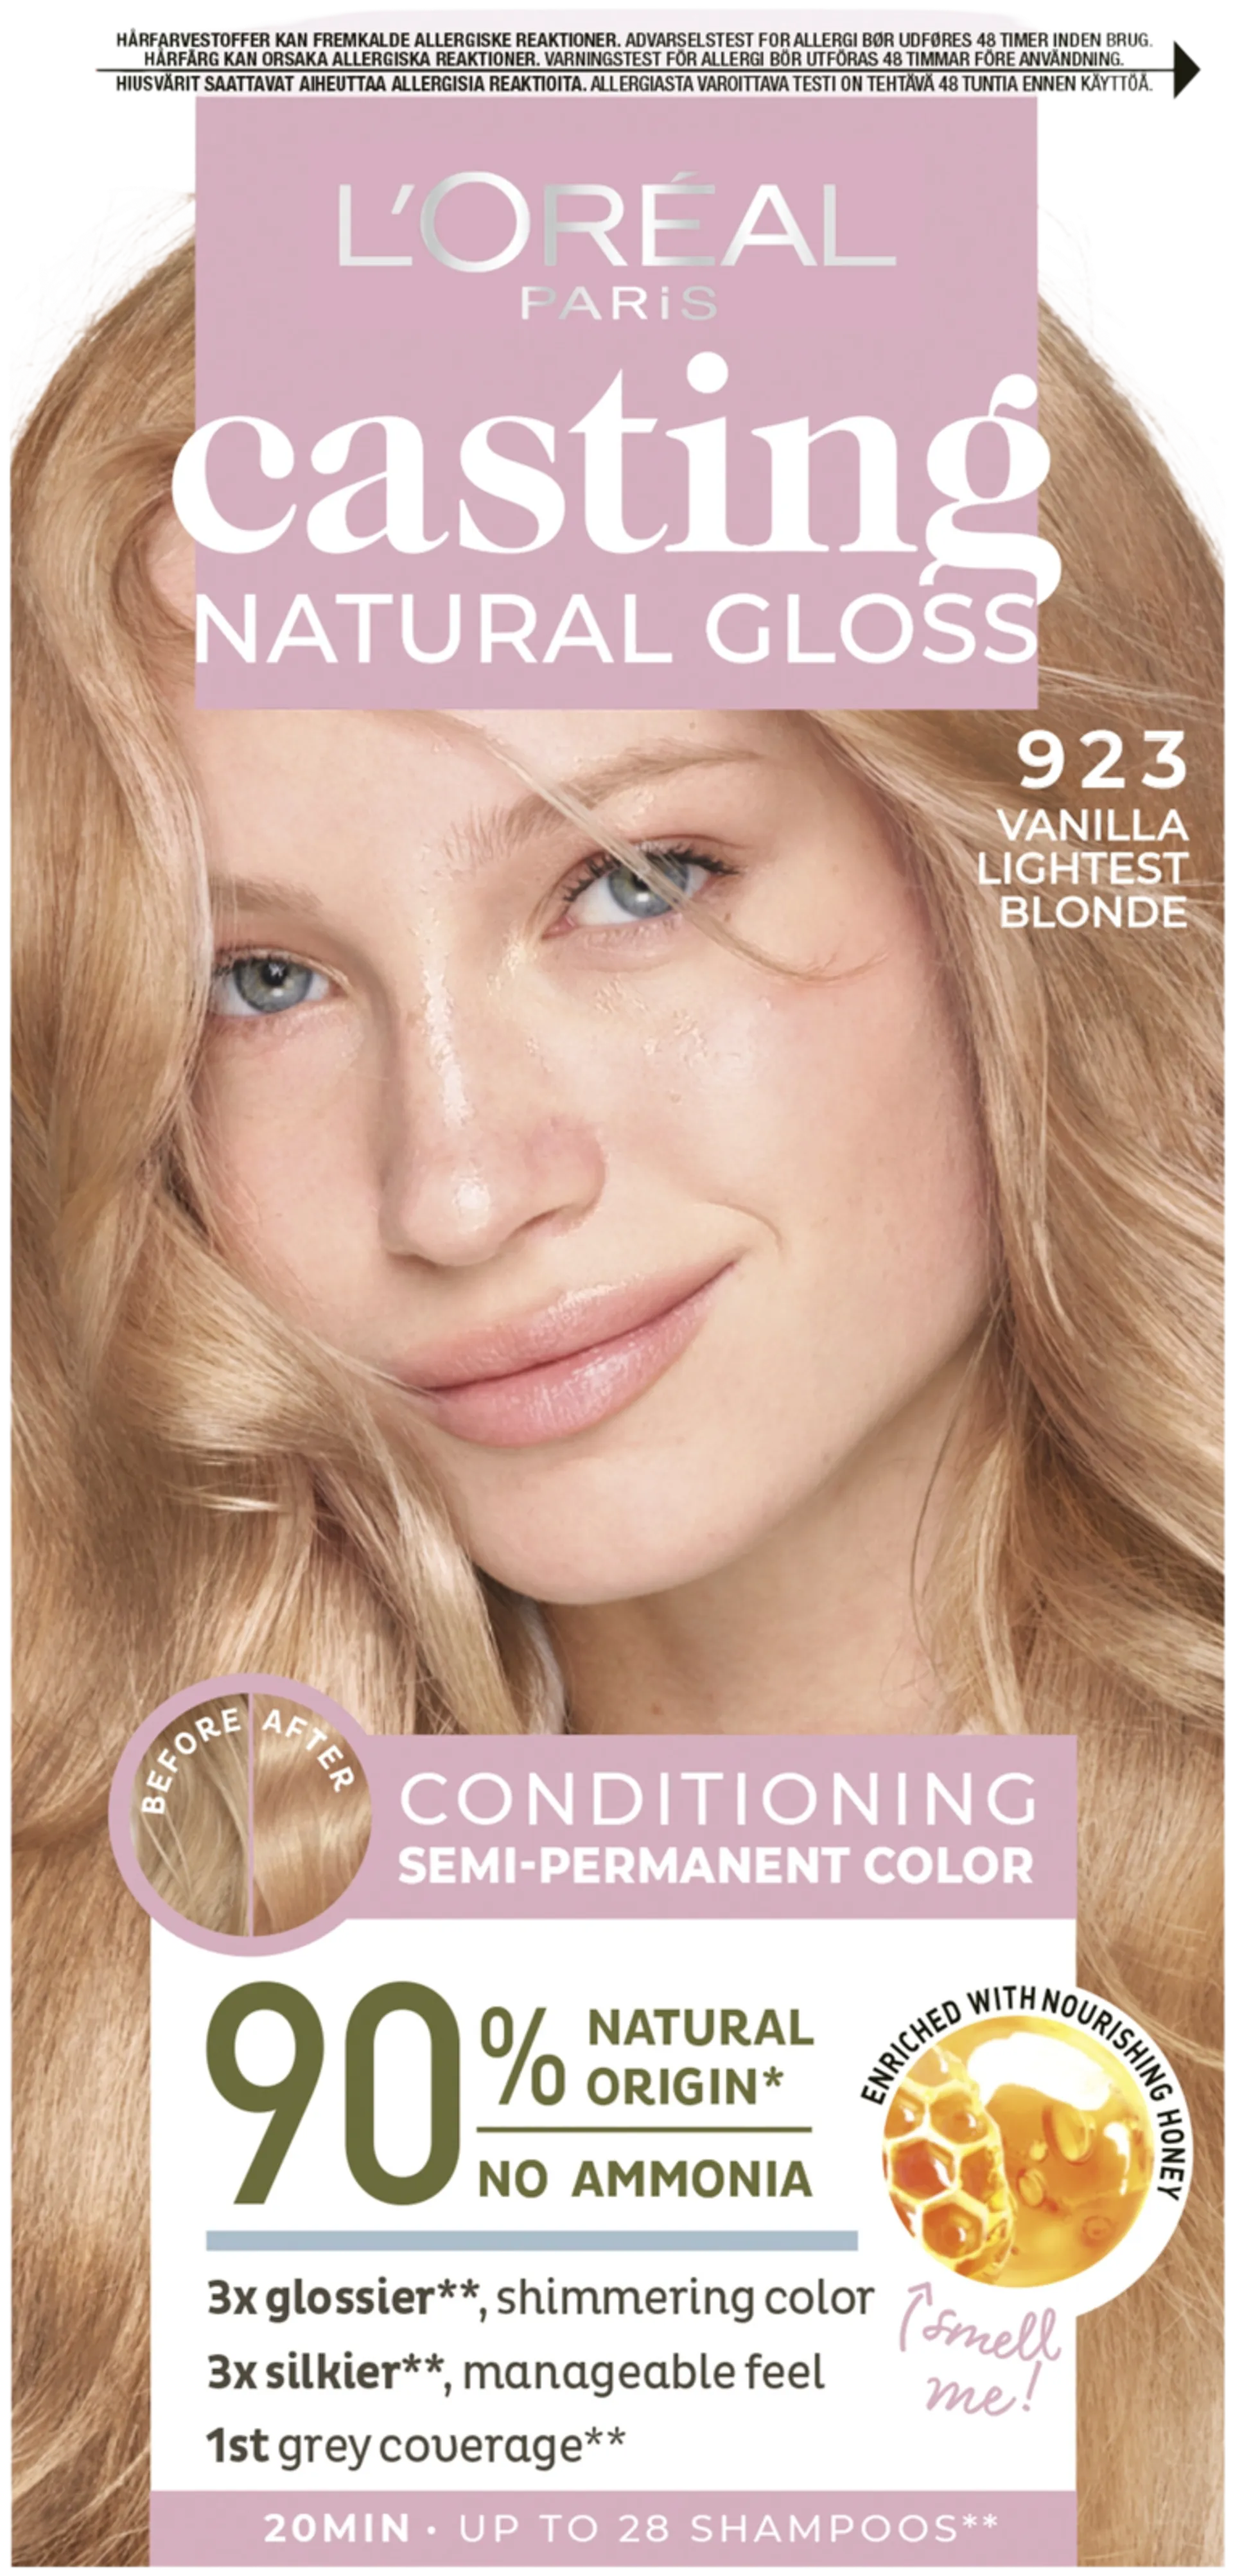 L'Oréal Paris Casting Natural Gloss 823 Light Blonde Vanille kevytväri 1kpl - 1